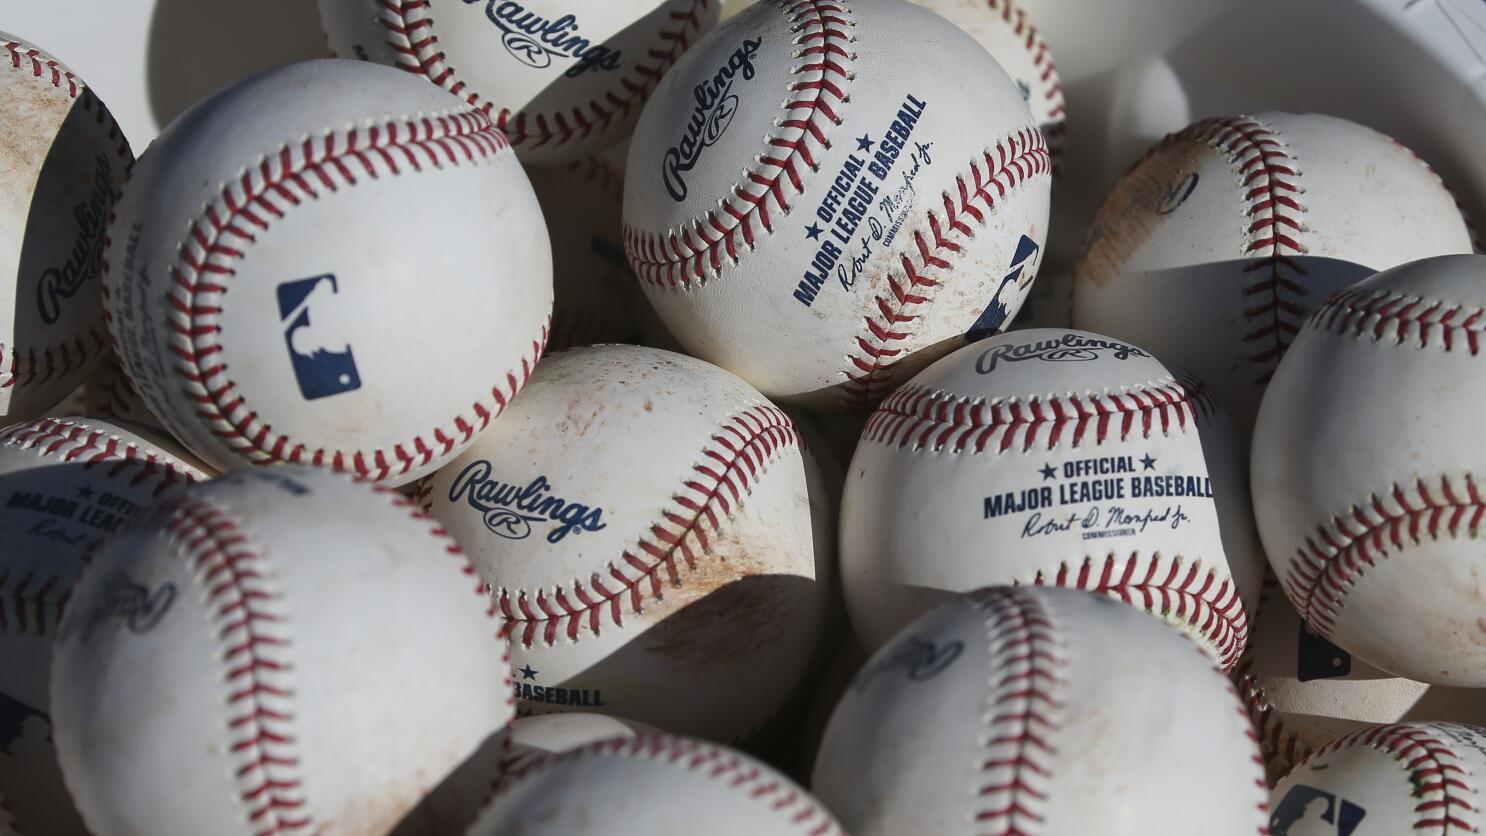 MLB, USA Baseball start combine ahead of pushed-back draft - The